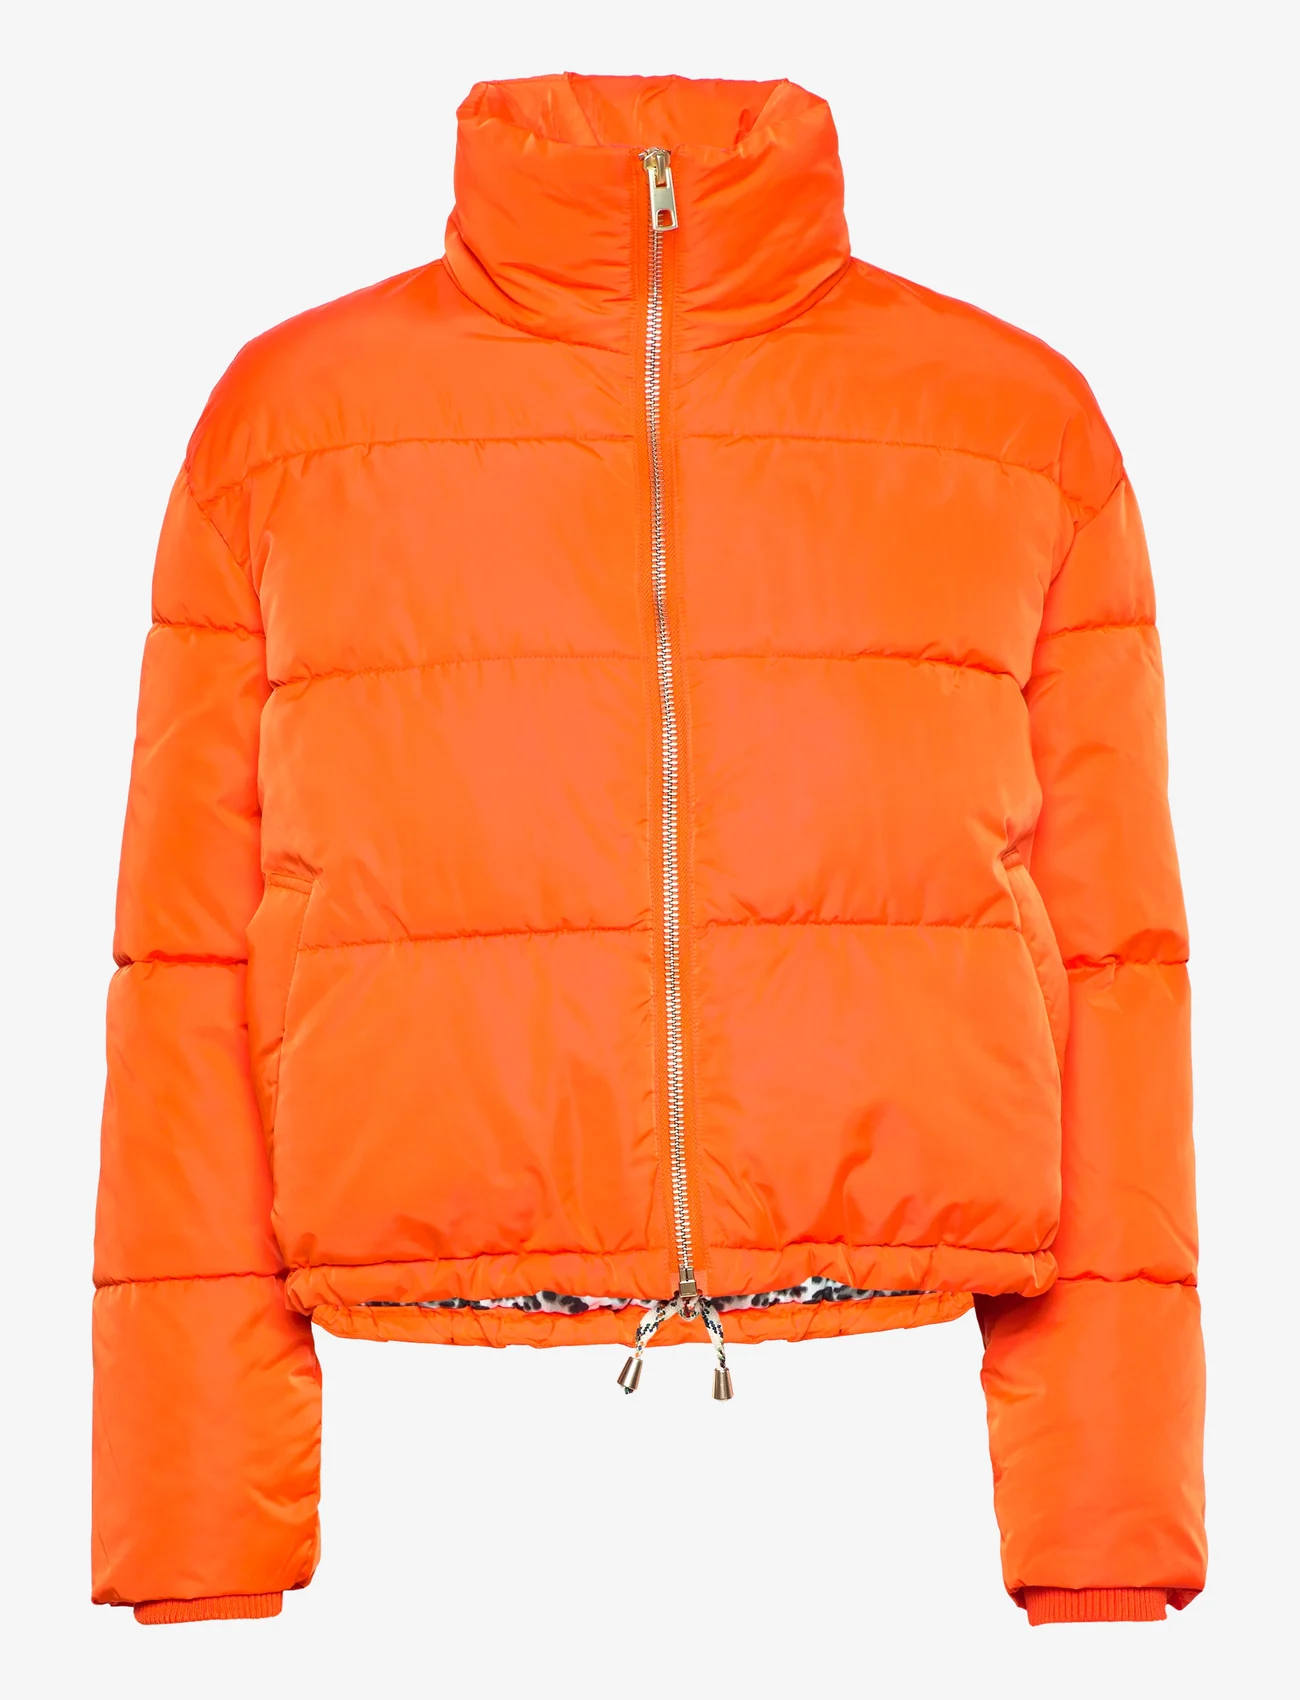 Coster Copenhagen - Short puffer jacket - vinterjackor - hot orange - 0